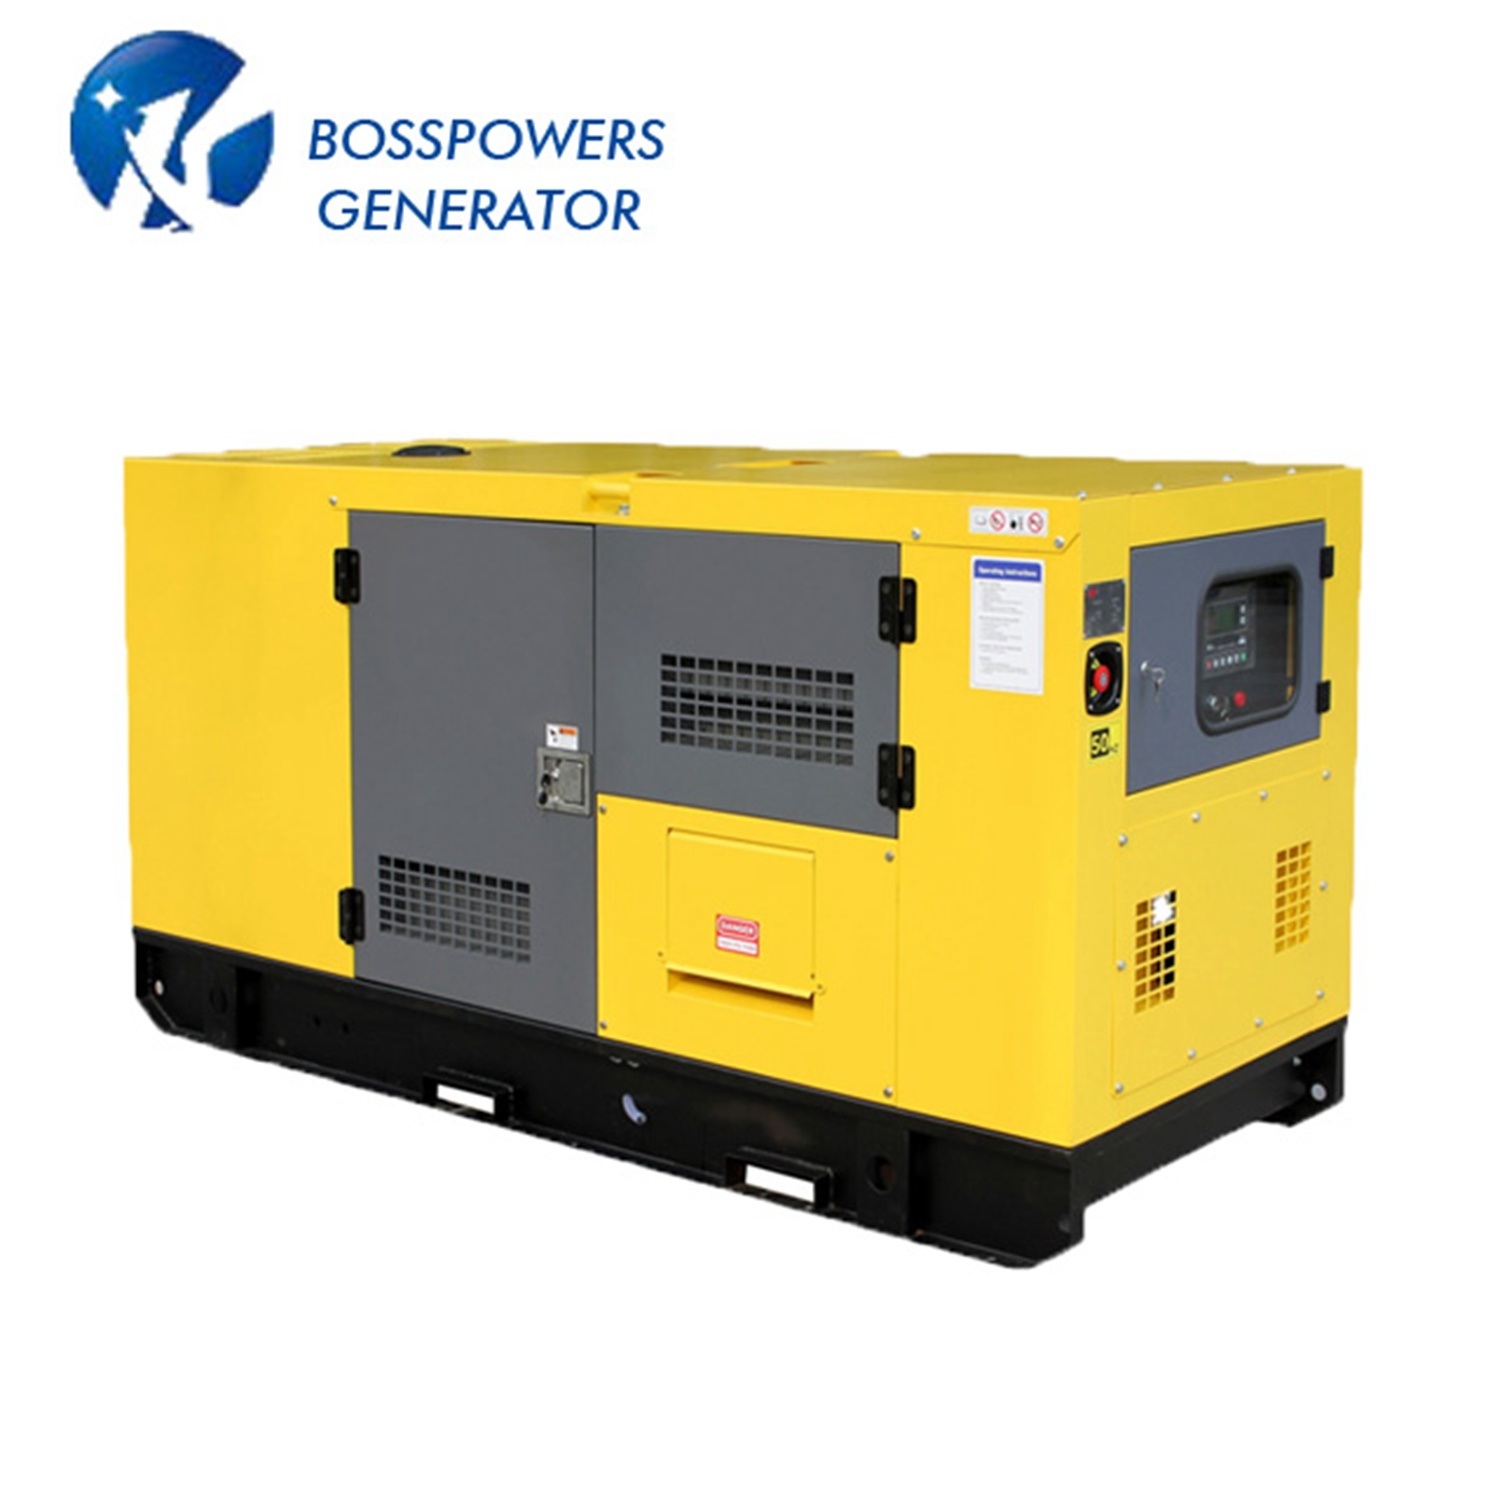 Shangchai (SDEC) 640kw Electric Diesel Generator Factory Price Diesel Generator CE ISO Approved